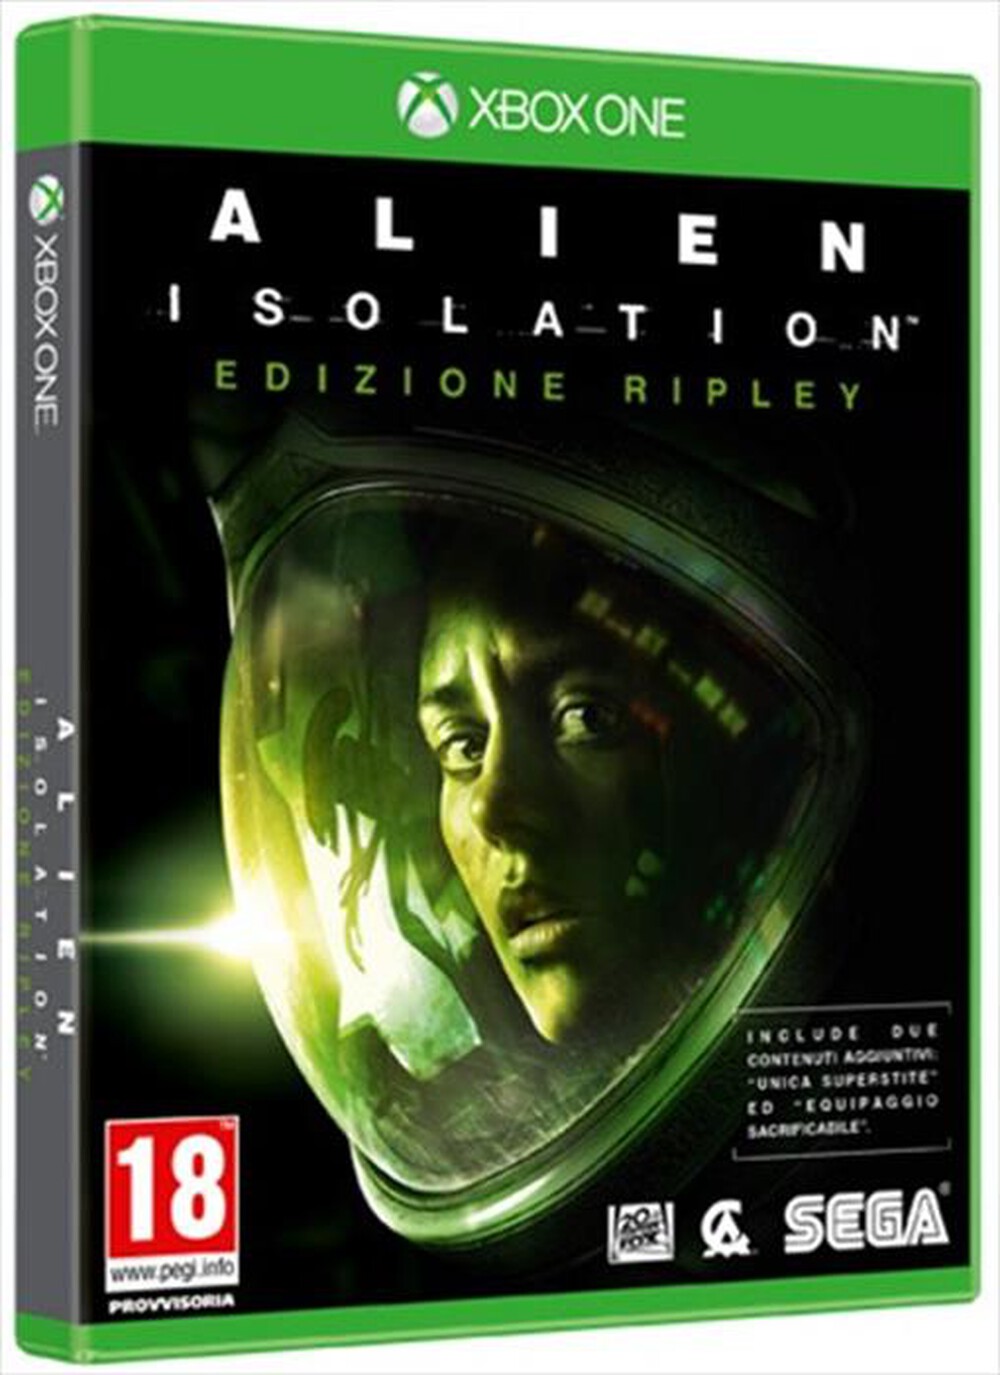 "HALIFAX - Alien Isolation Ripley Ed. Xbox One"